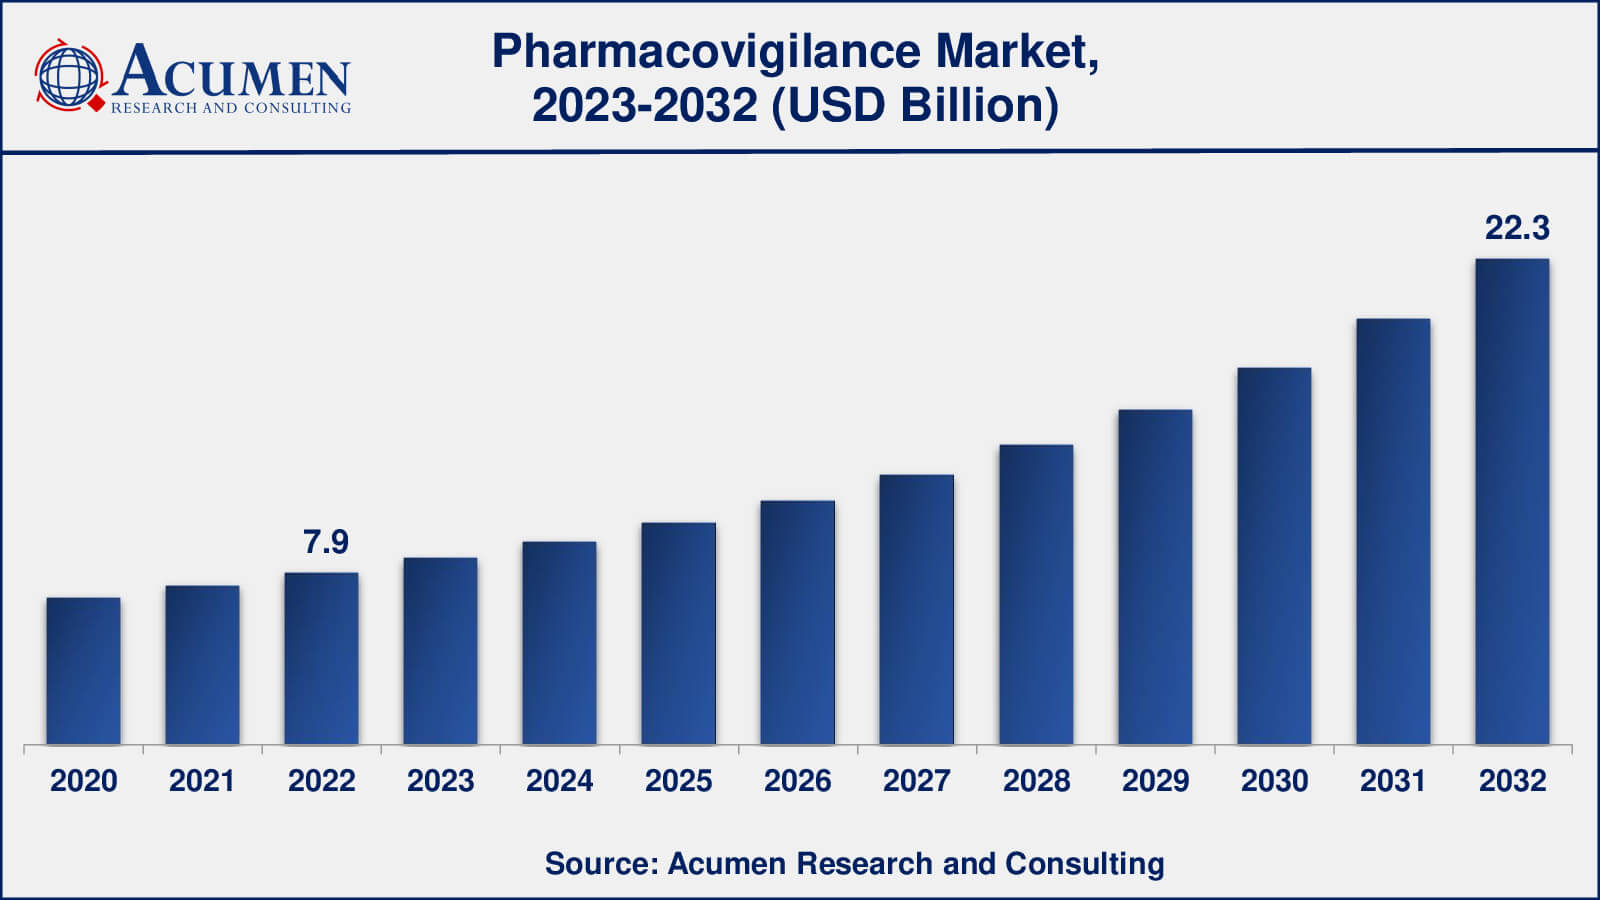 Pharmacovigilance Market Drivers